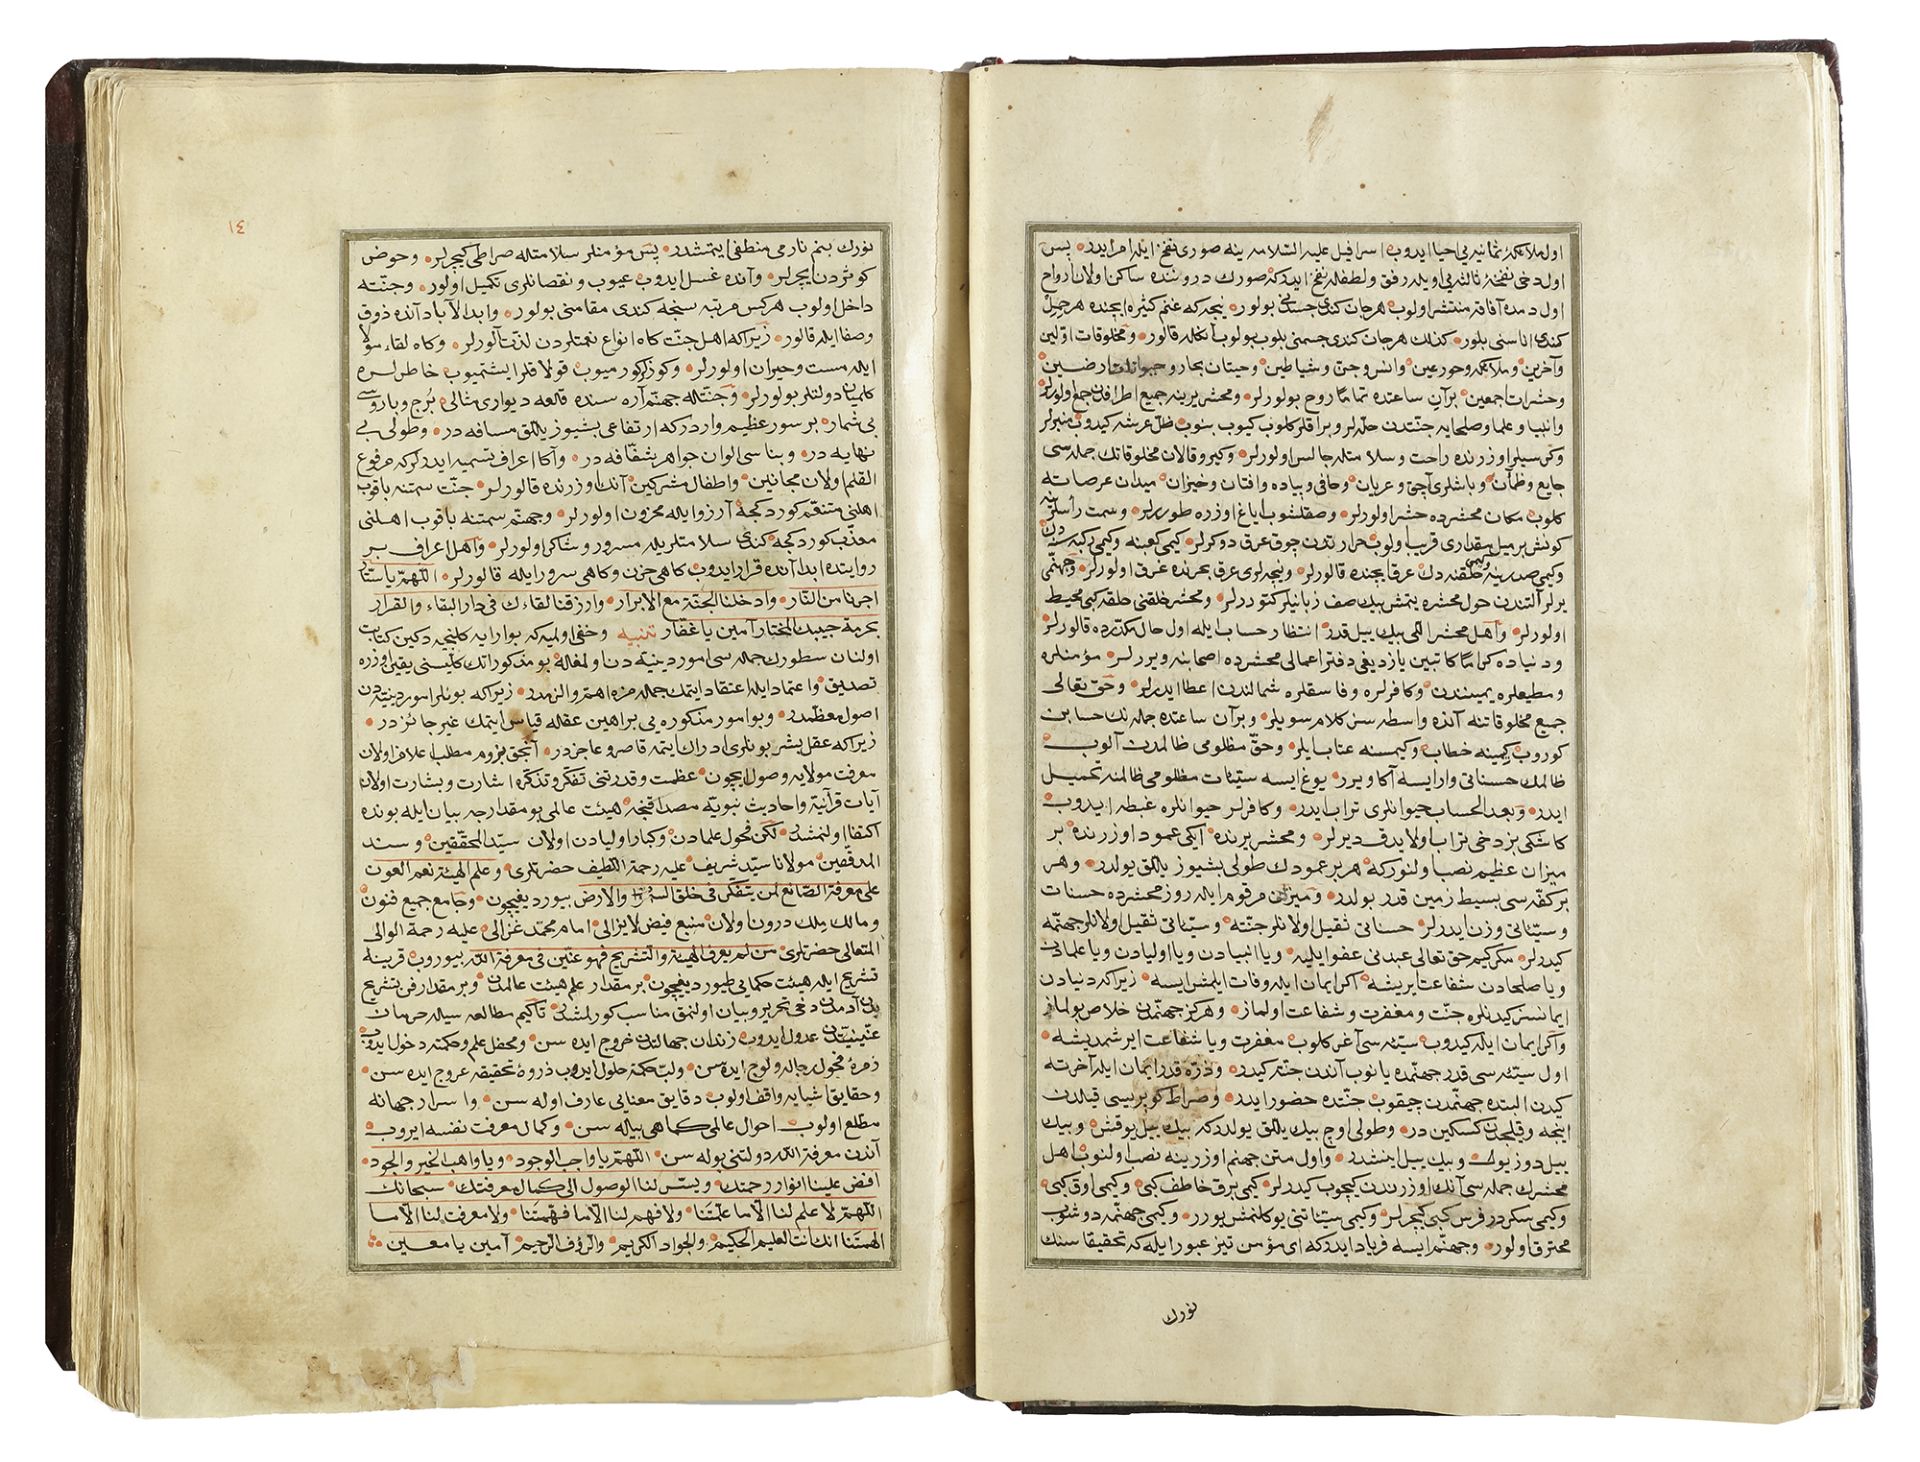 MARIFETNAME, IBRAHIM HAKKI, COPIED BY SAE'D ALLAH BIN ALI BIN AHMED, TURKEY, 1221 AH/1806 AD - Image 10 of 58